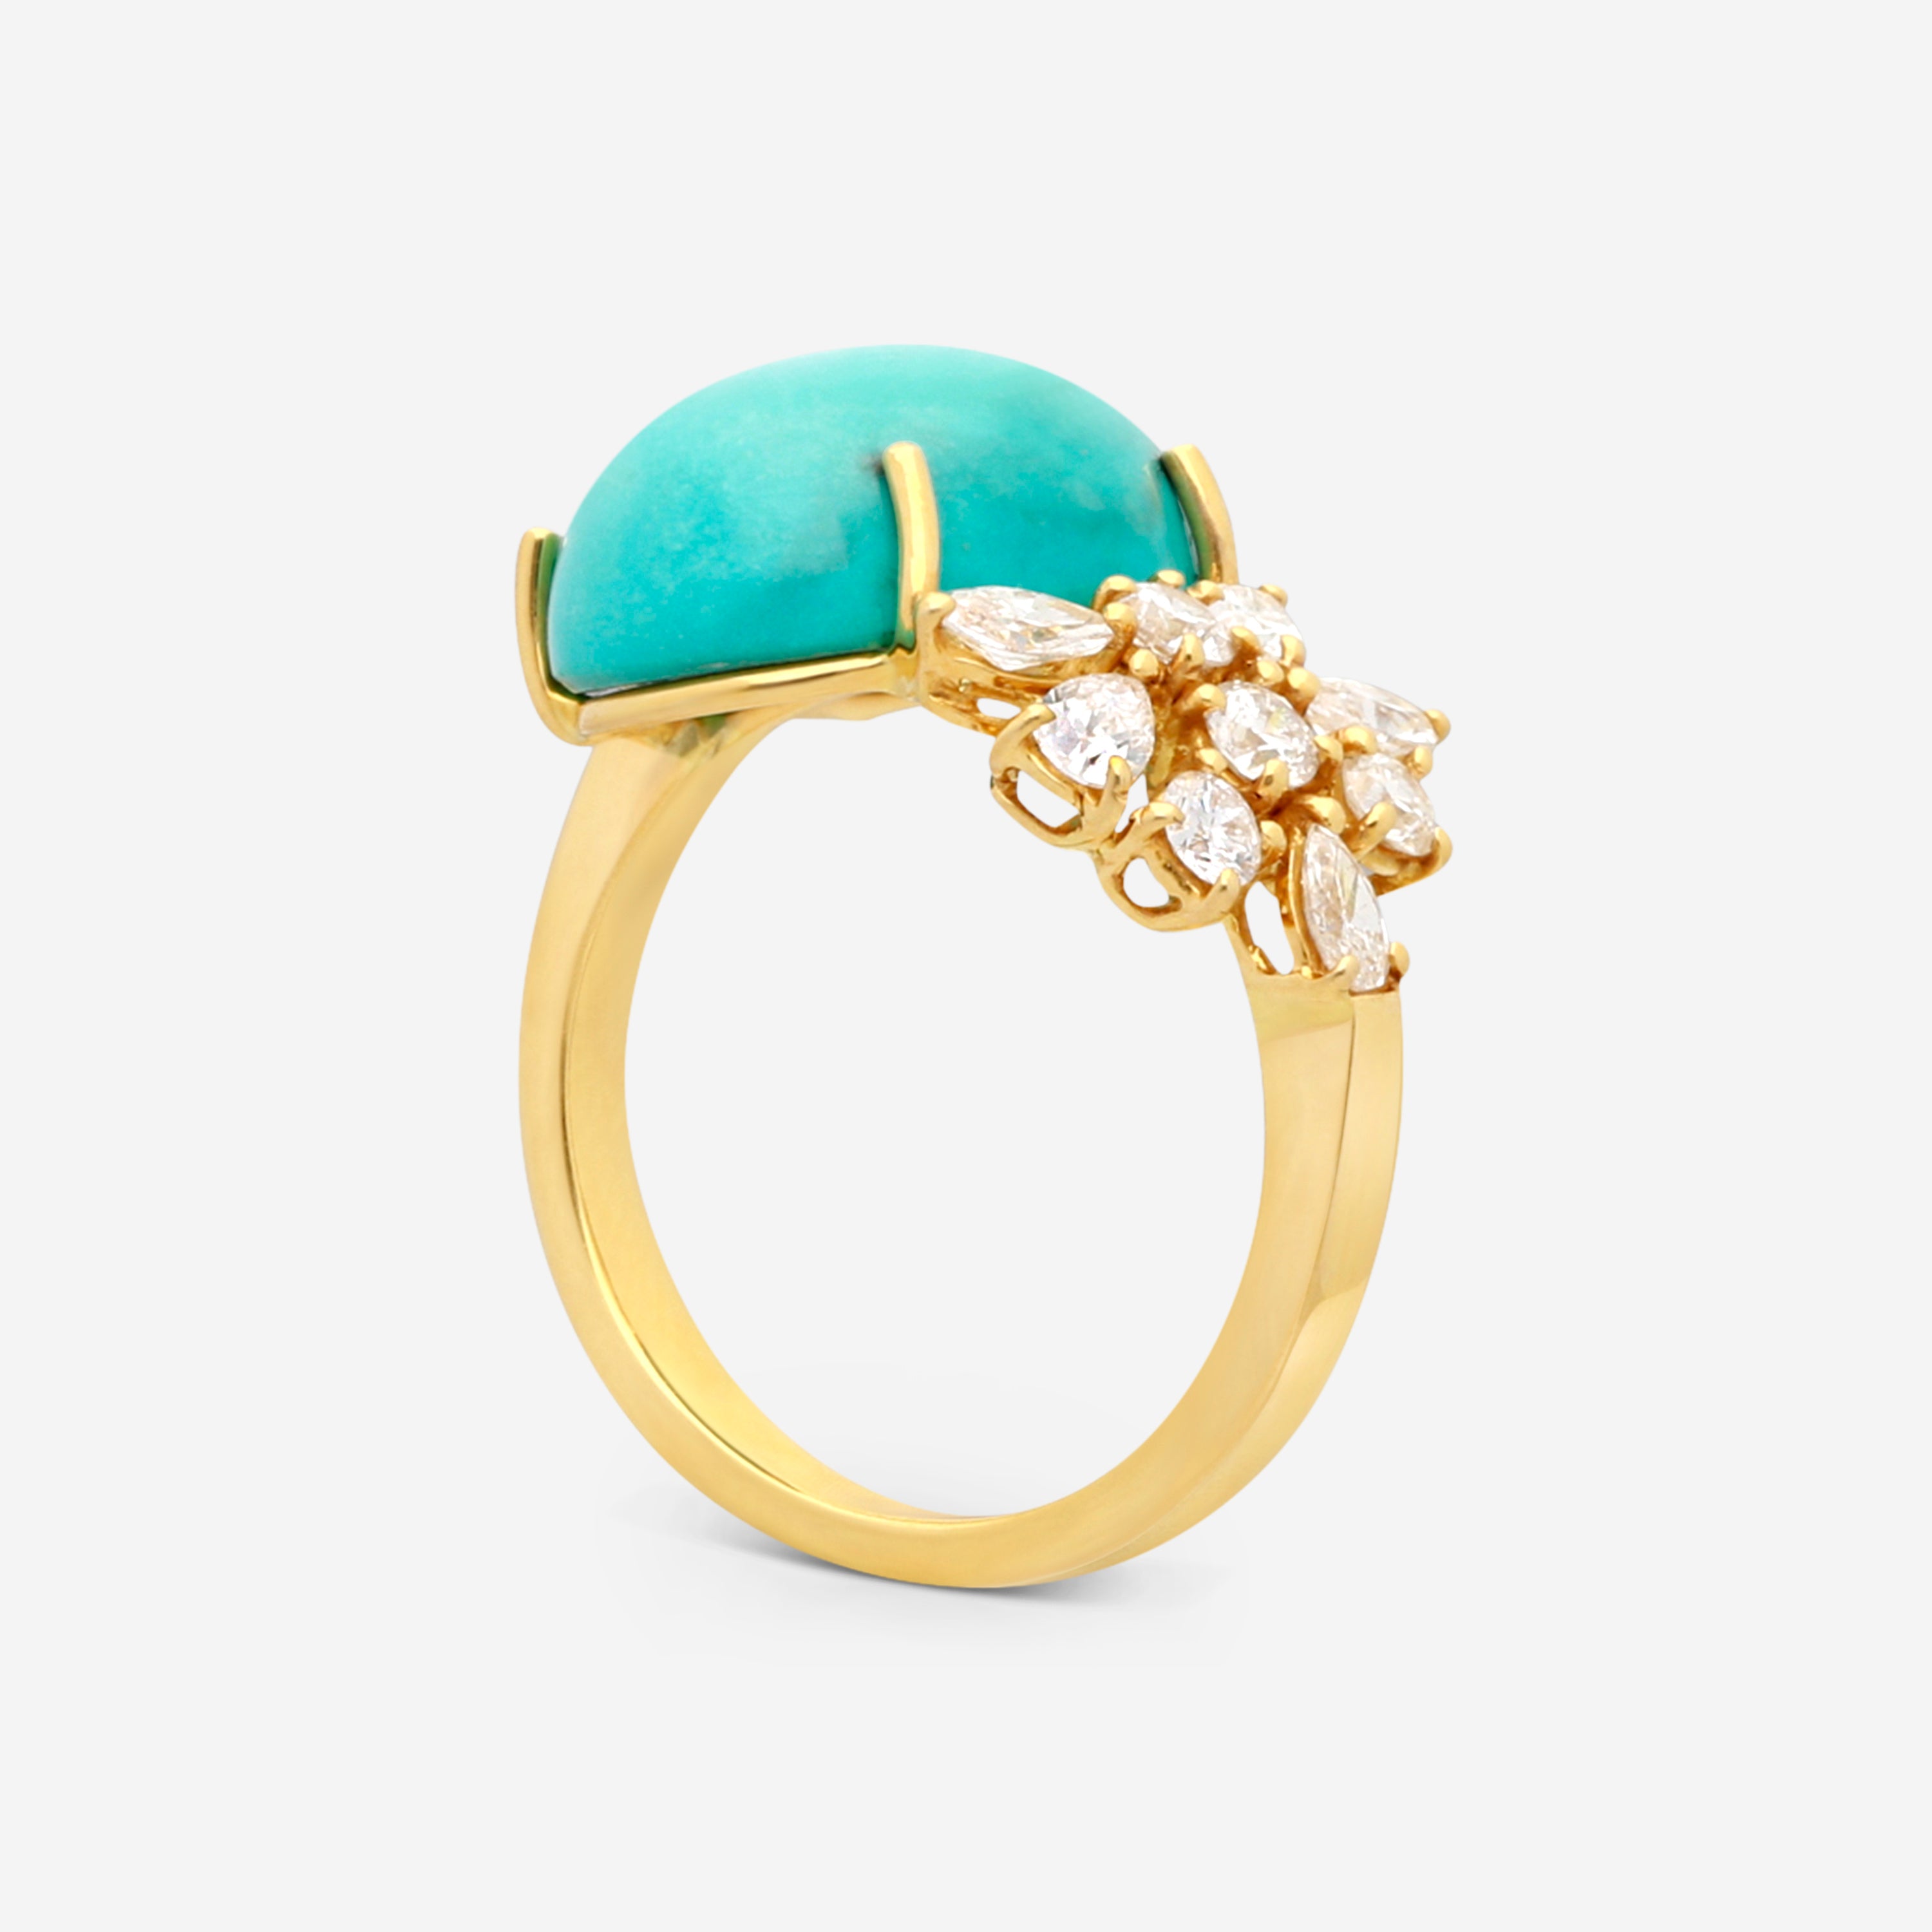 Zydo 18K Yellow Gold Diamond and Turquoise Ring OL552